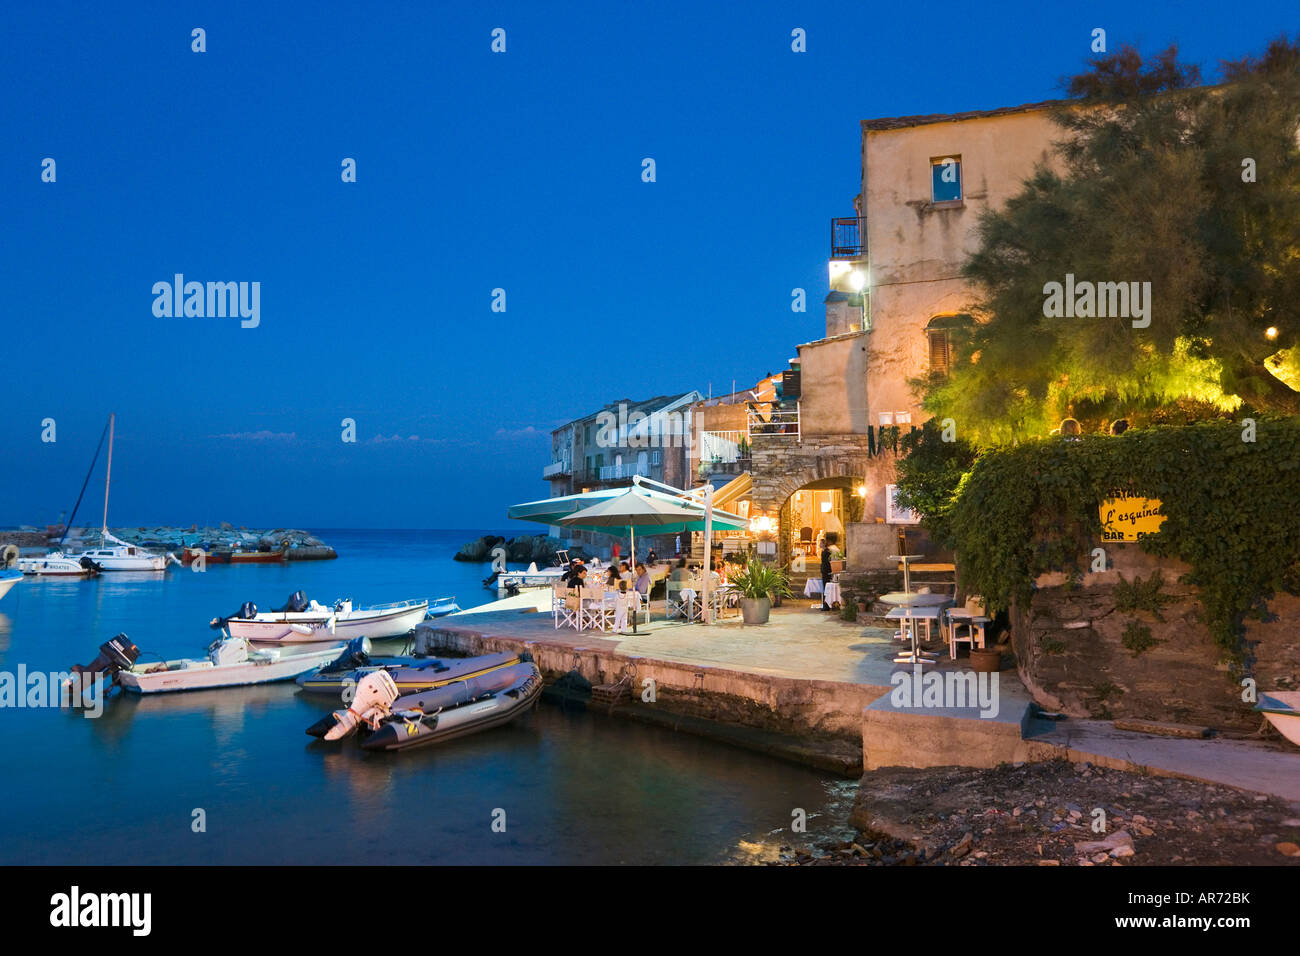 Harbourfront restaurant at night, Erbalunga, Cap Corse, Corsica, France Stock Photo